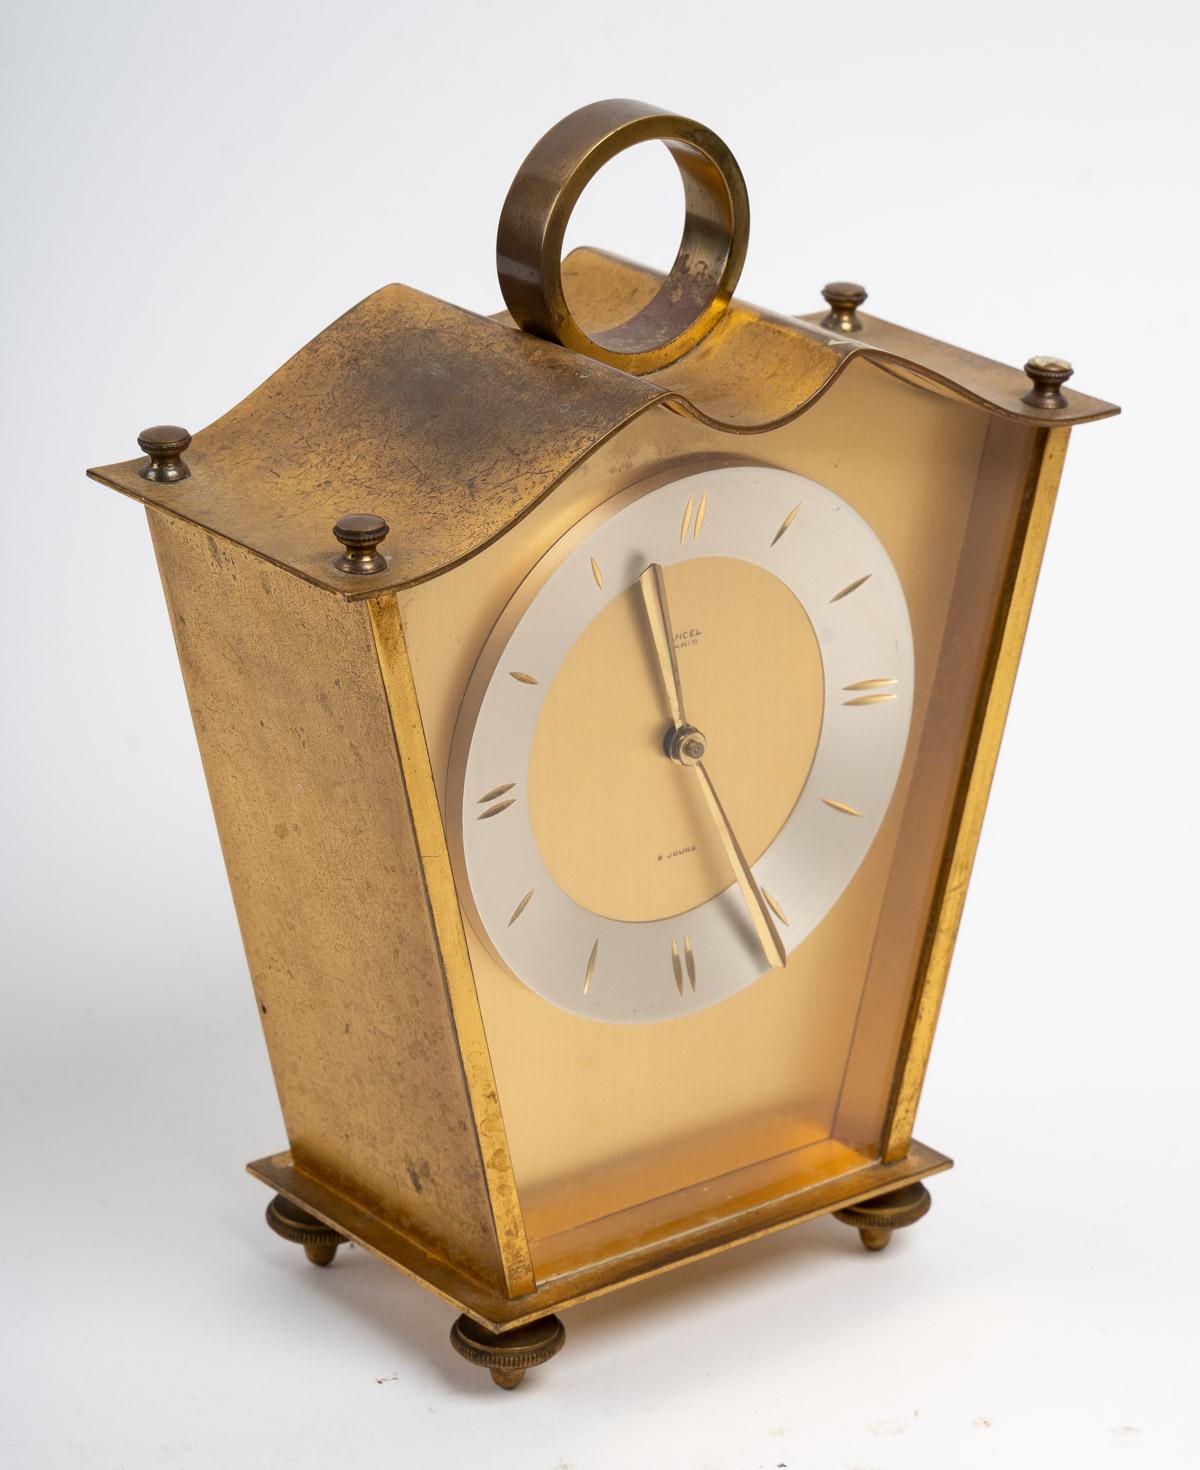 Bronze Desk Clock of the Lancel Paris Brand from the 1940s